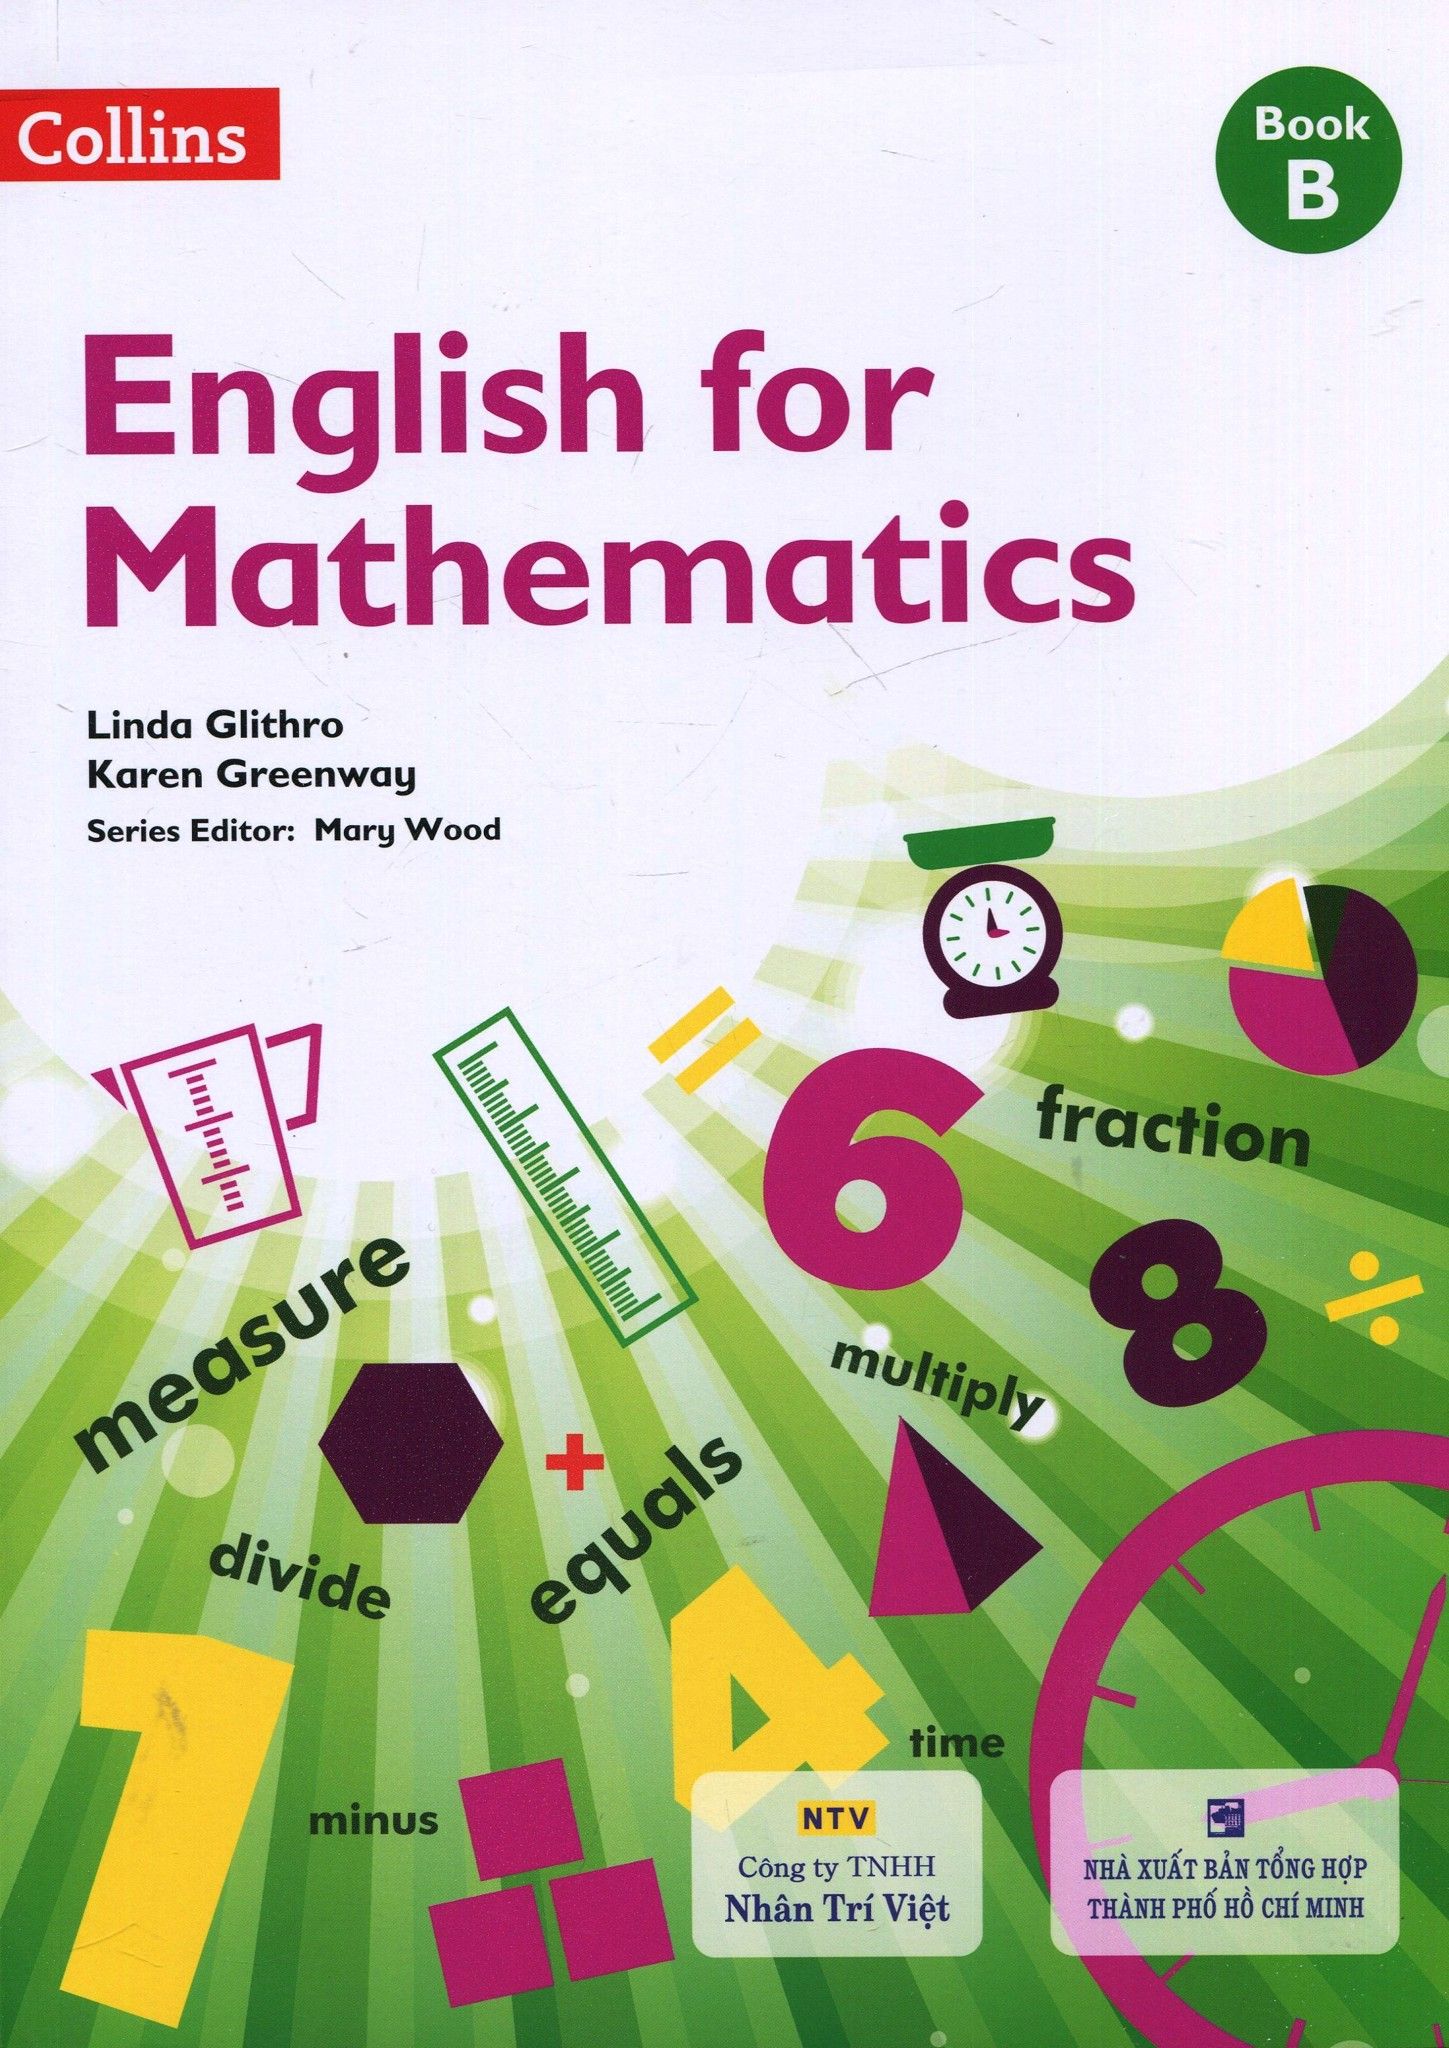  Collins - English For Mathematics (Book B) 